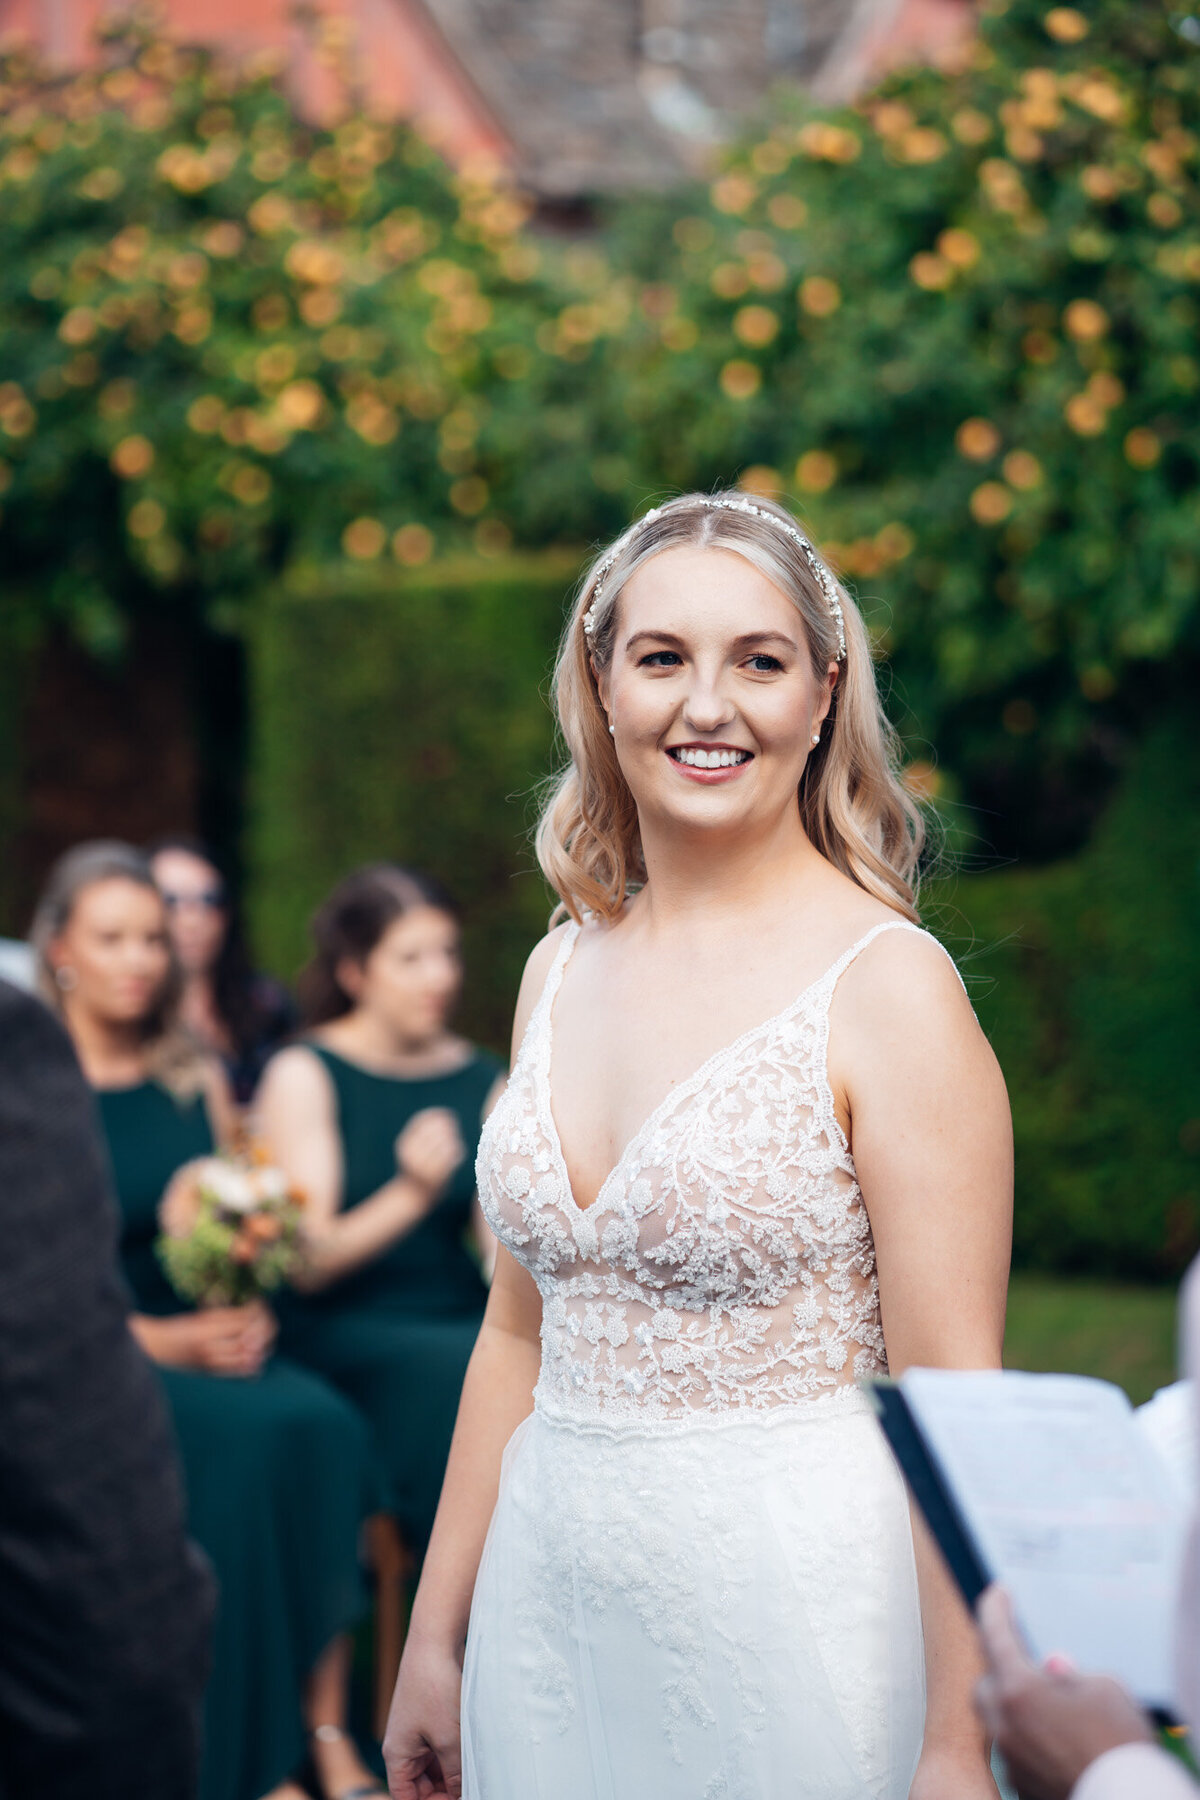 Pauntley-court-wedding-photographer-bride-during-outdoor-ceremony